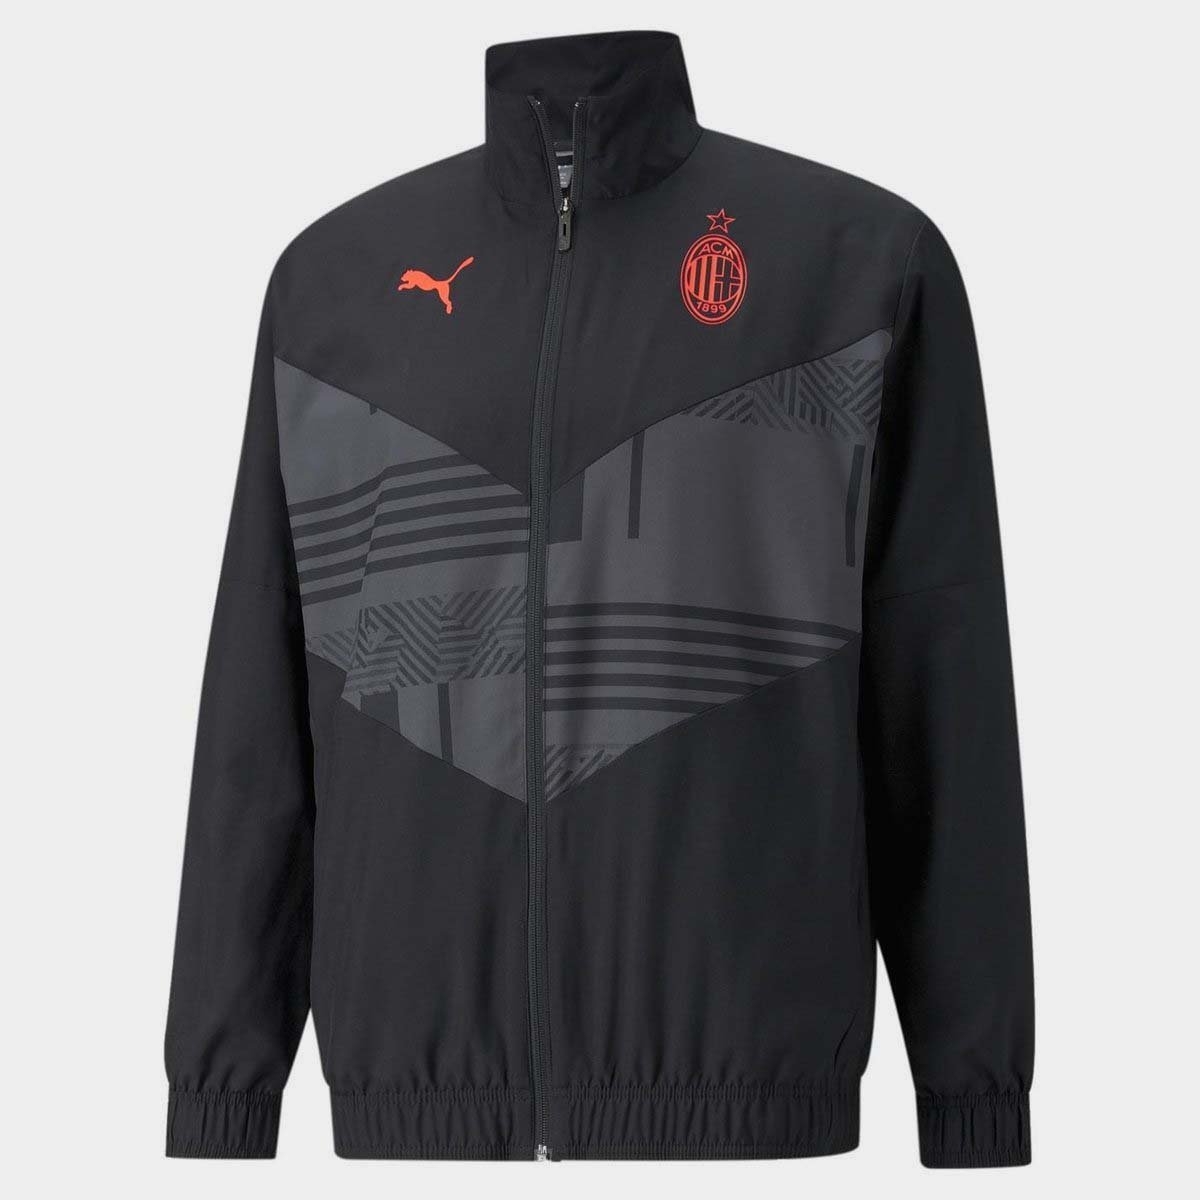 Men's PUMA AC Milan Prematch Woven Jacket in Black/Red size L